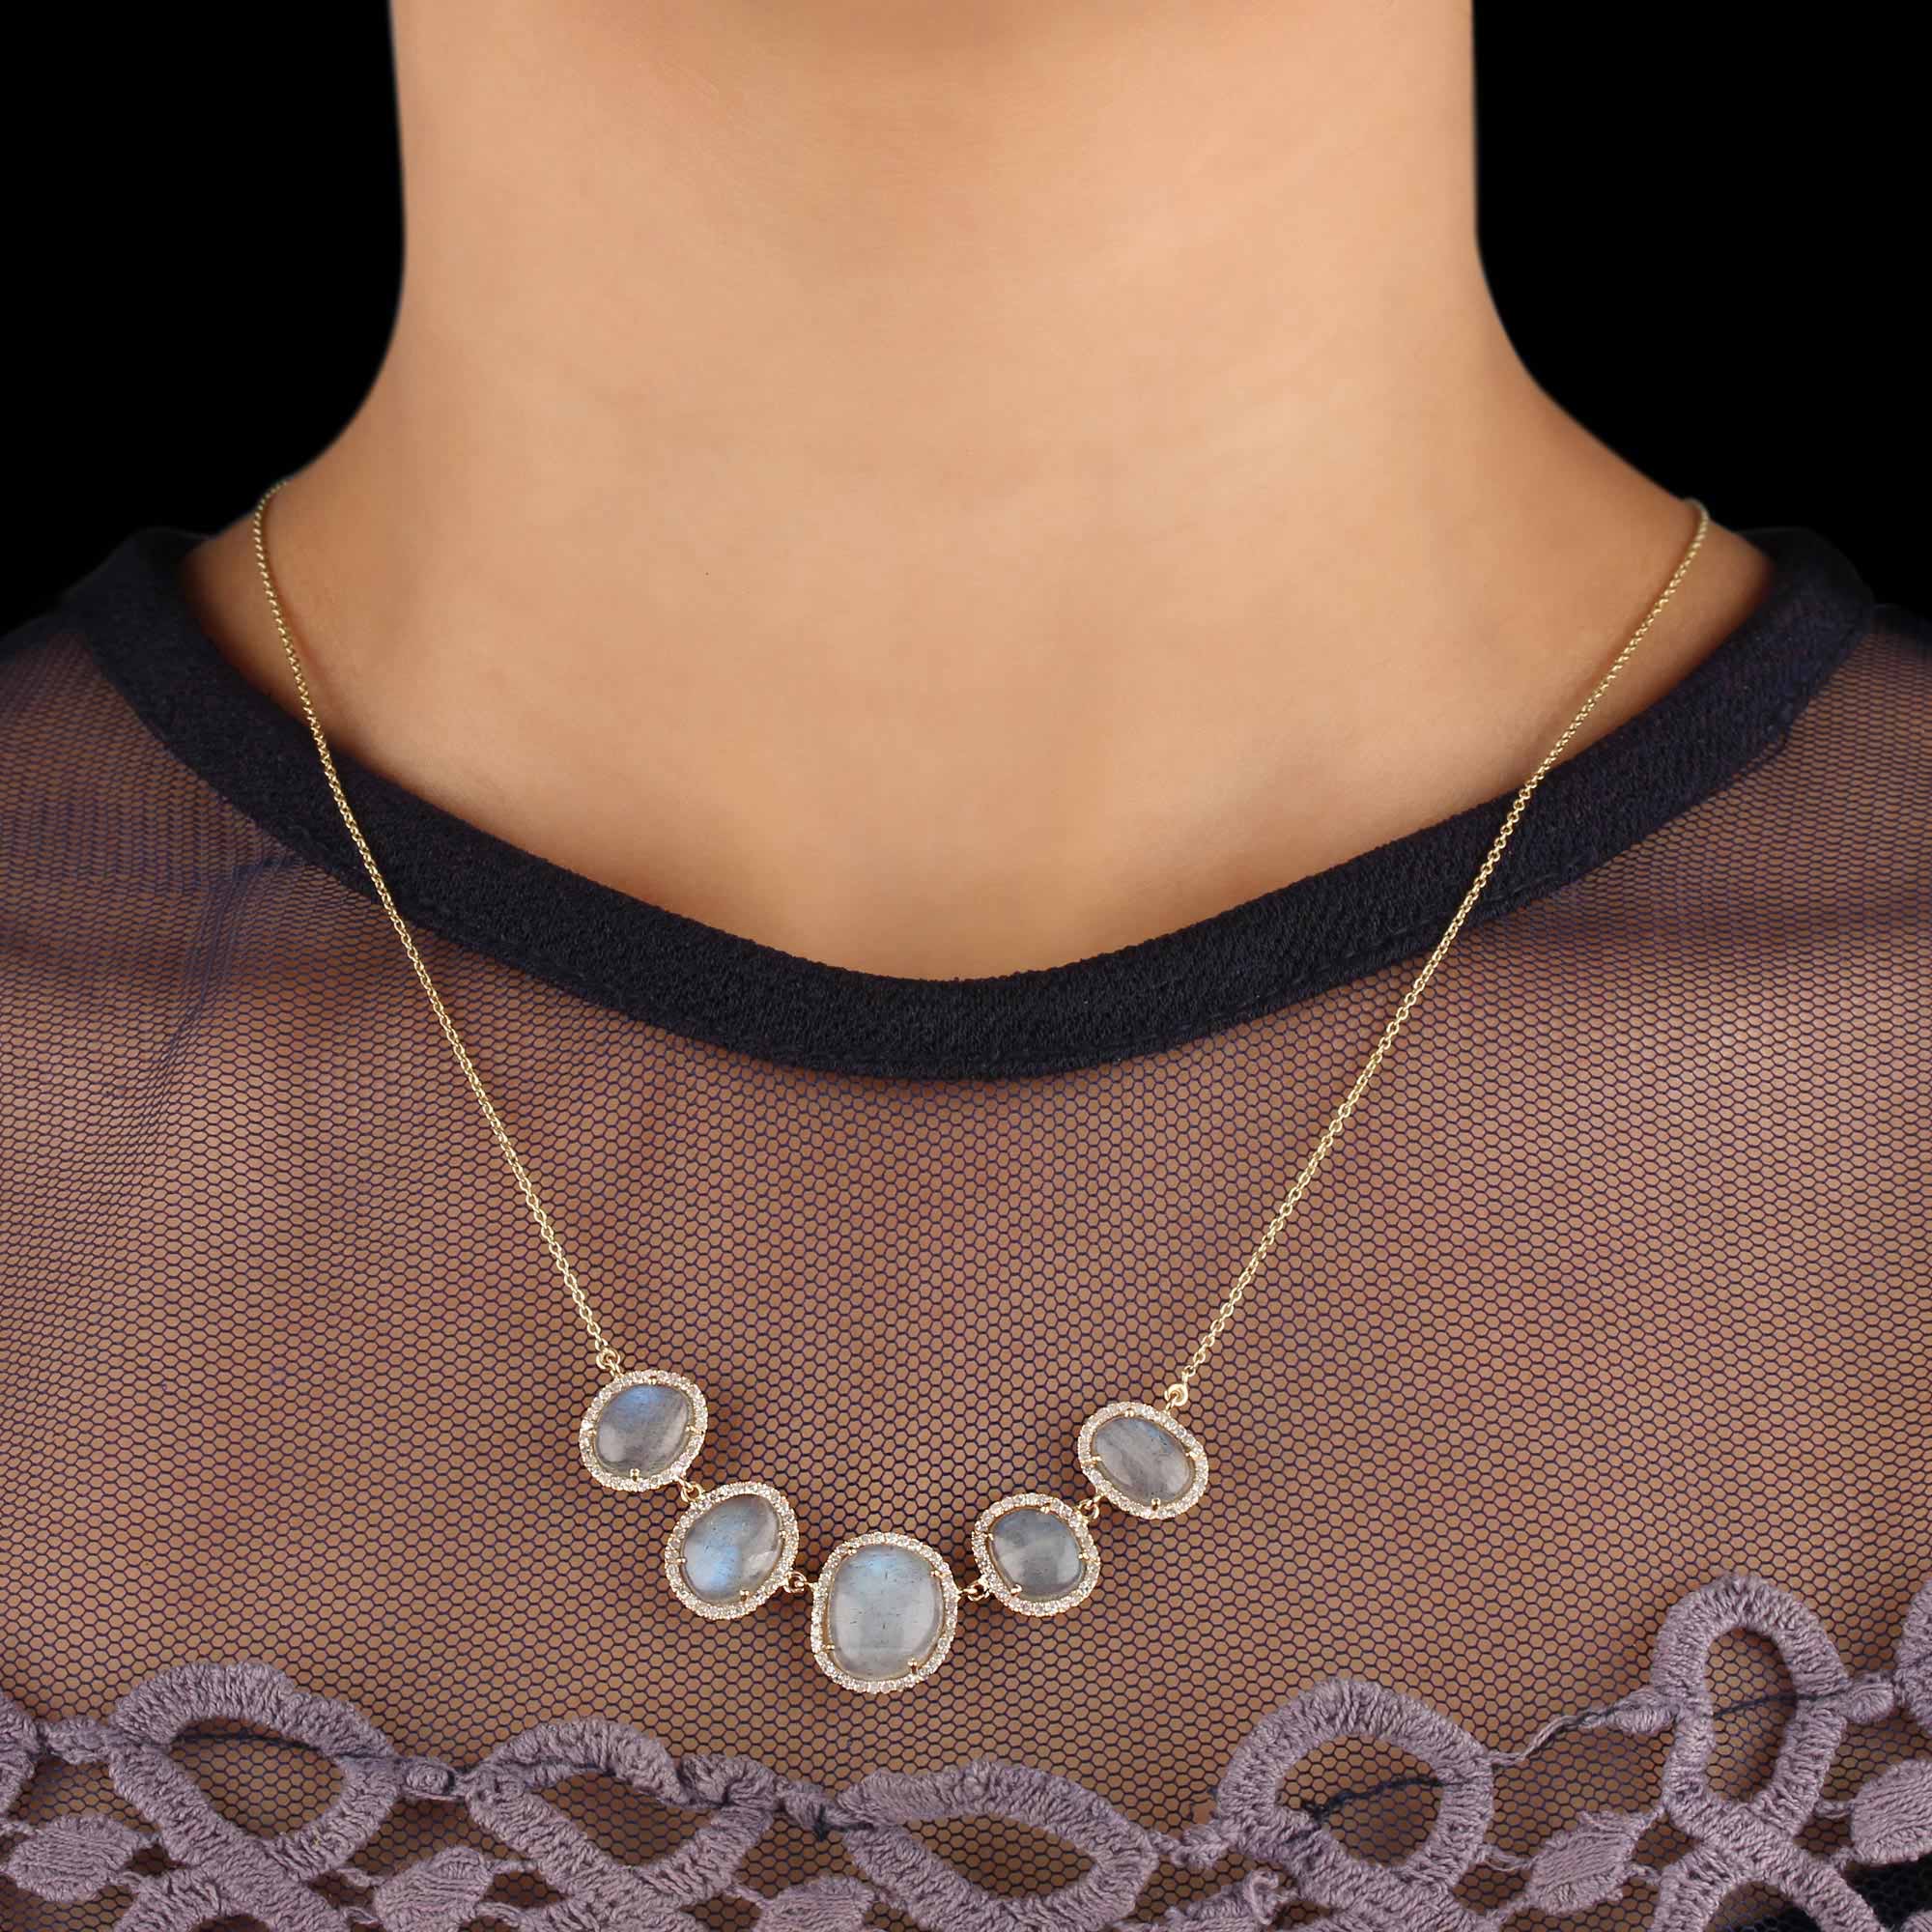 14K Solid Gold Labradorite Pendant Chain Necklace Pave Diamond Jewelry